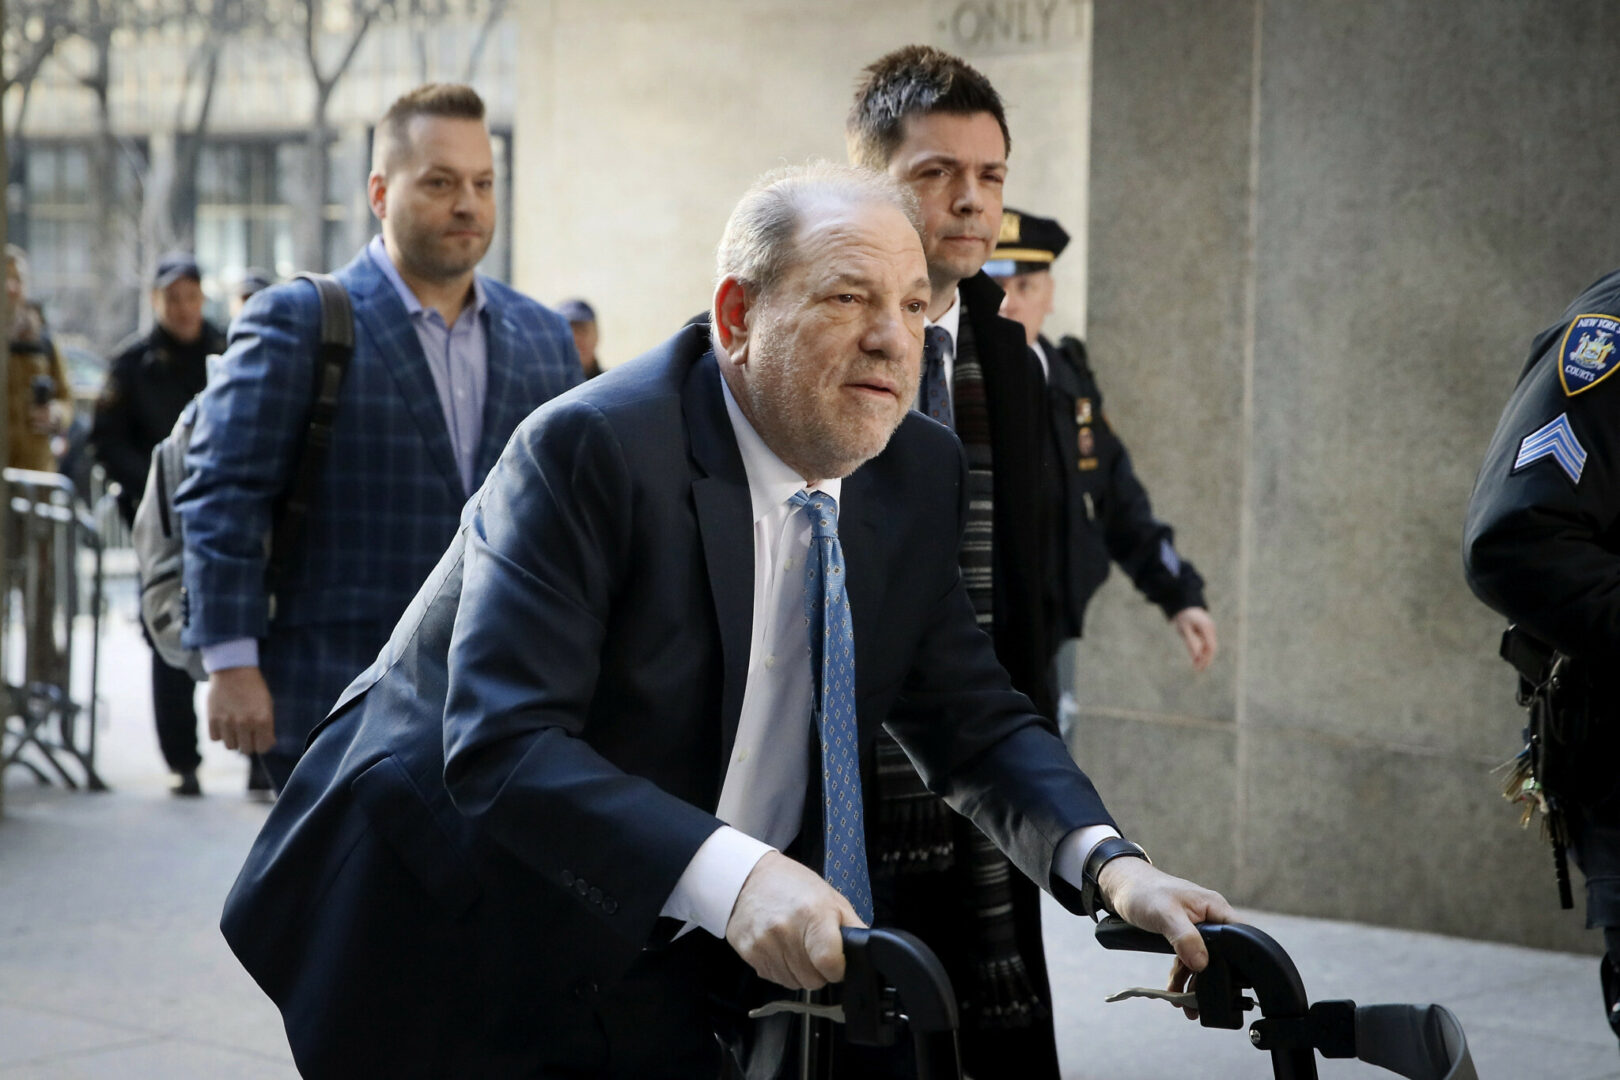  L'arrivée d'Harvey Weinstein au tribunal en février 2020